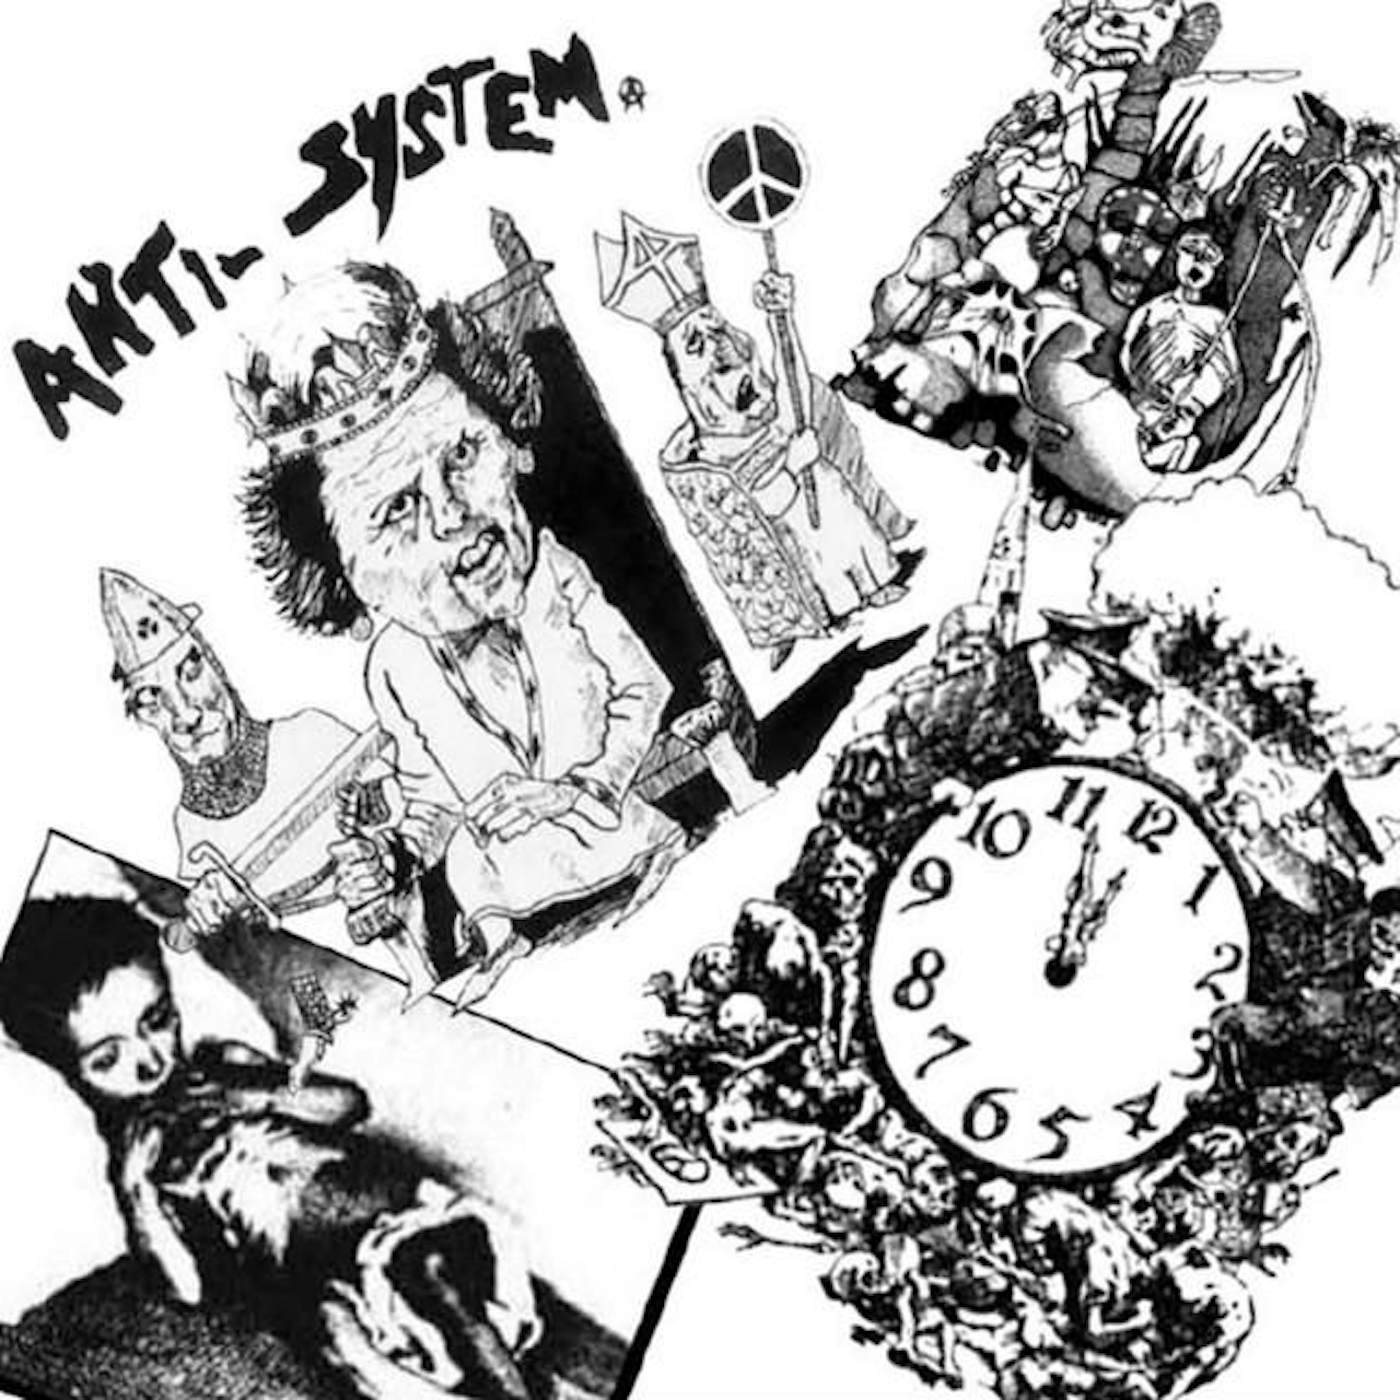 Anti-System